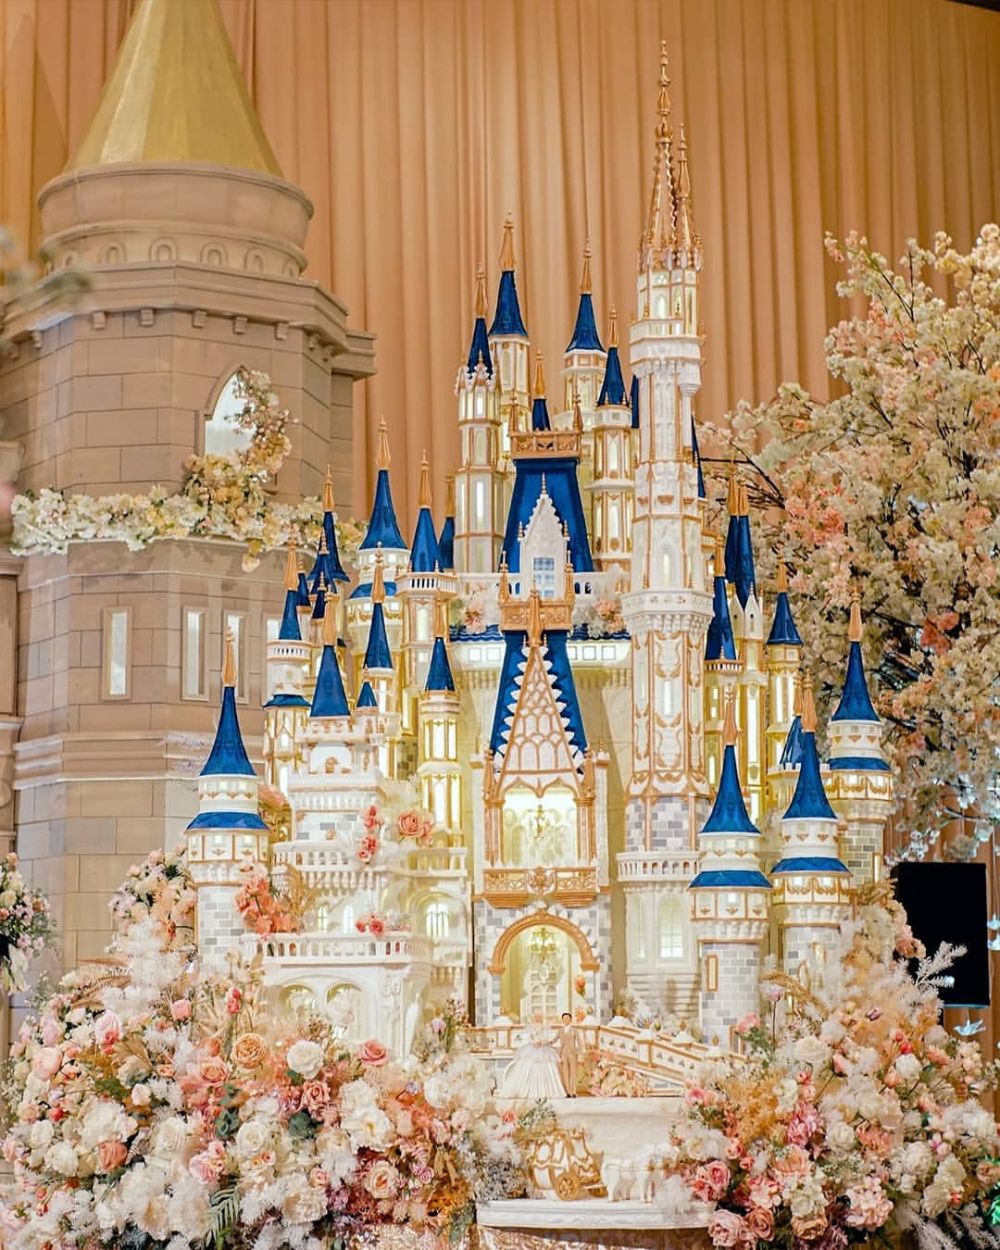 Potret kue pernikahan 9 seleb ini megah mirip istana kerajaan